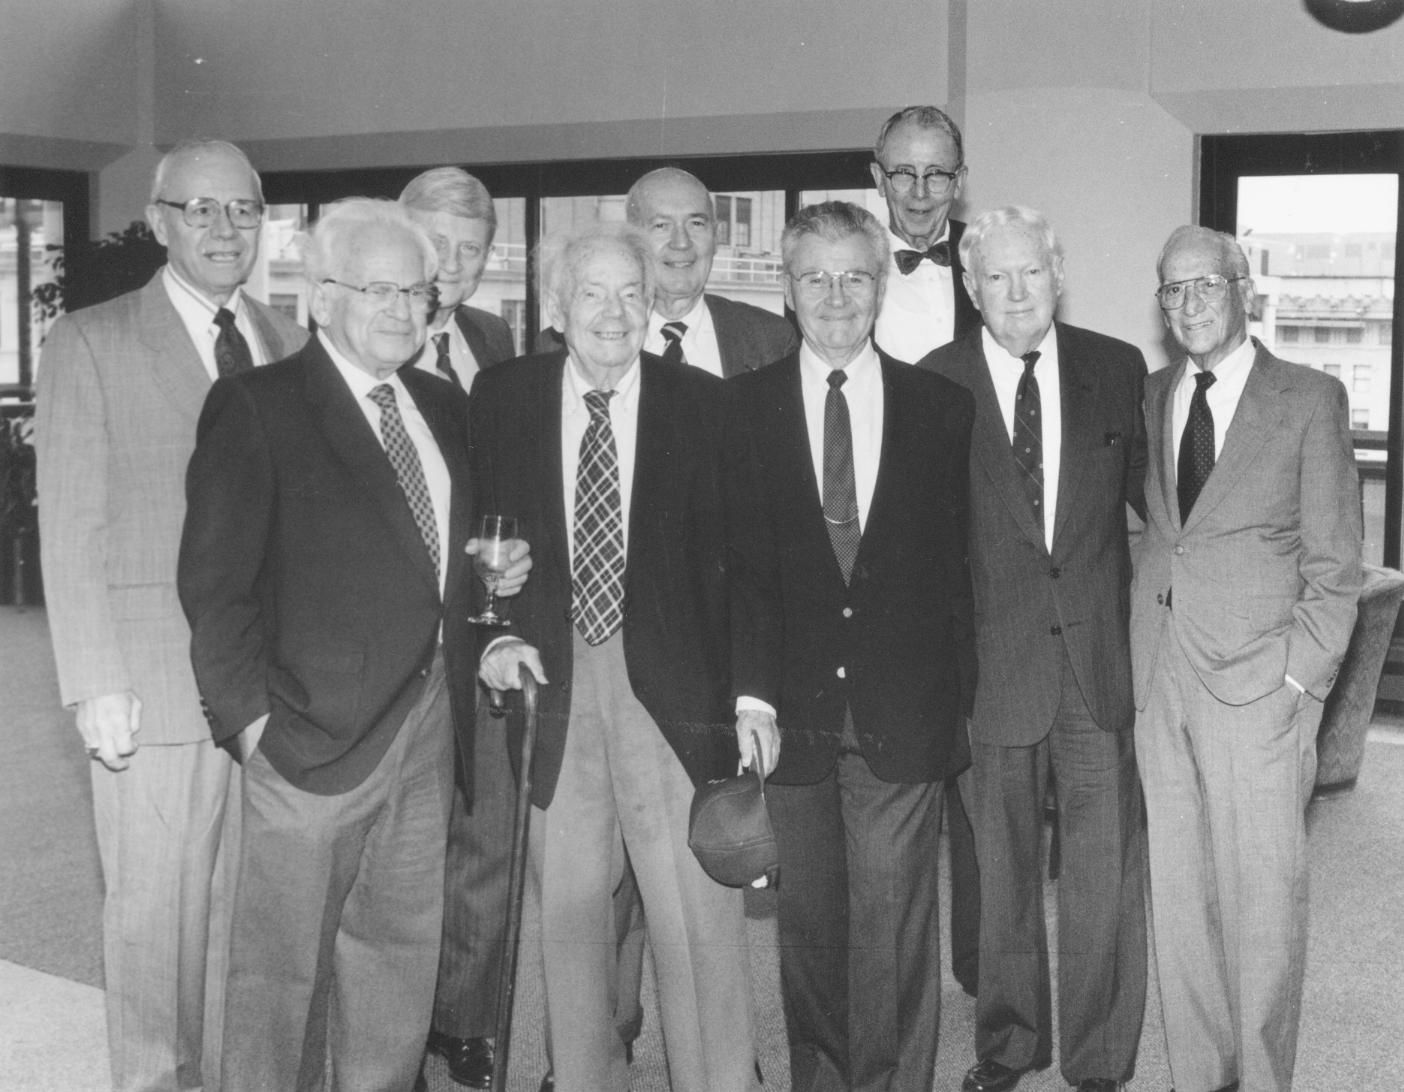 Left to right: Don Larrabee, Joe Laitin, John Harllee, Edgar Alan Poe, Ed Prina, Gen. Paul Tibbets, Frank Holeman, John Cosgrove, Shirley Povich.